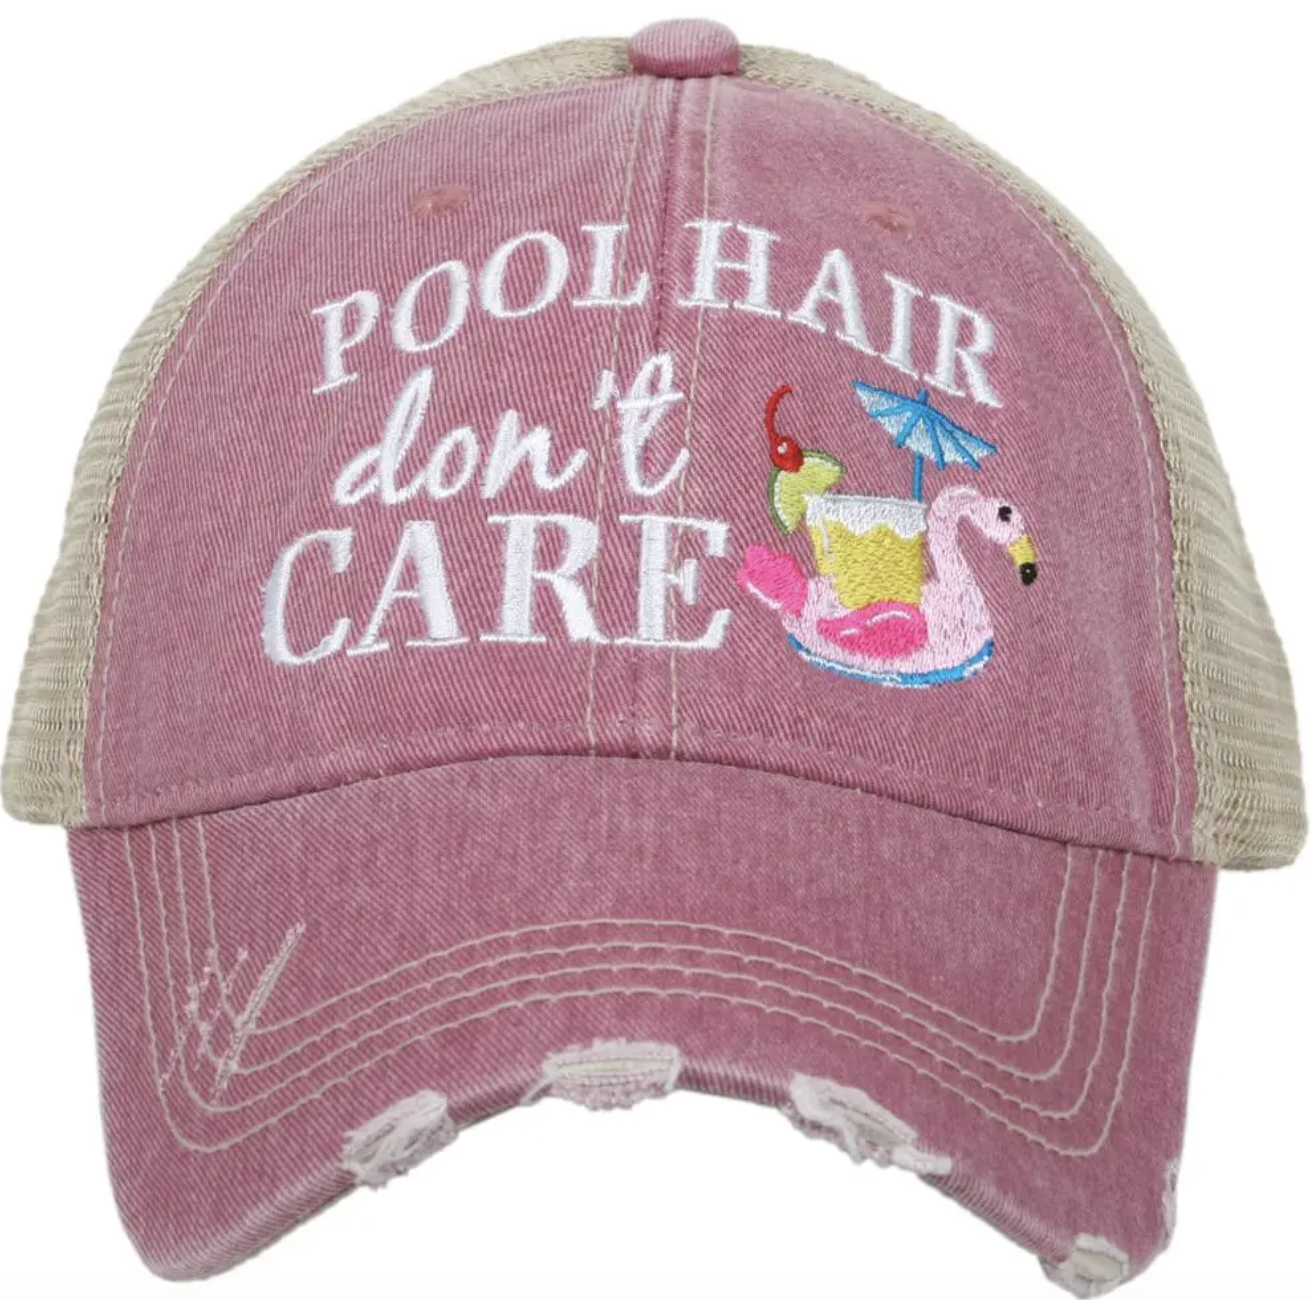 Pool Hair Don't Care Trucker Hat by Katydid